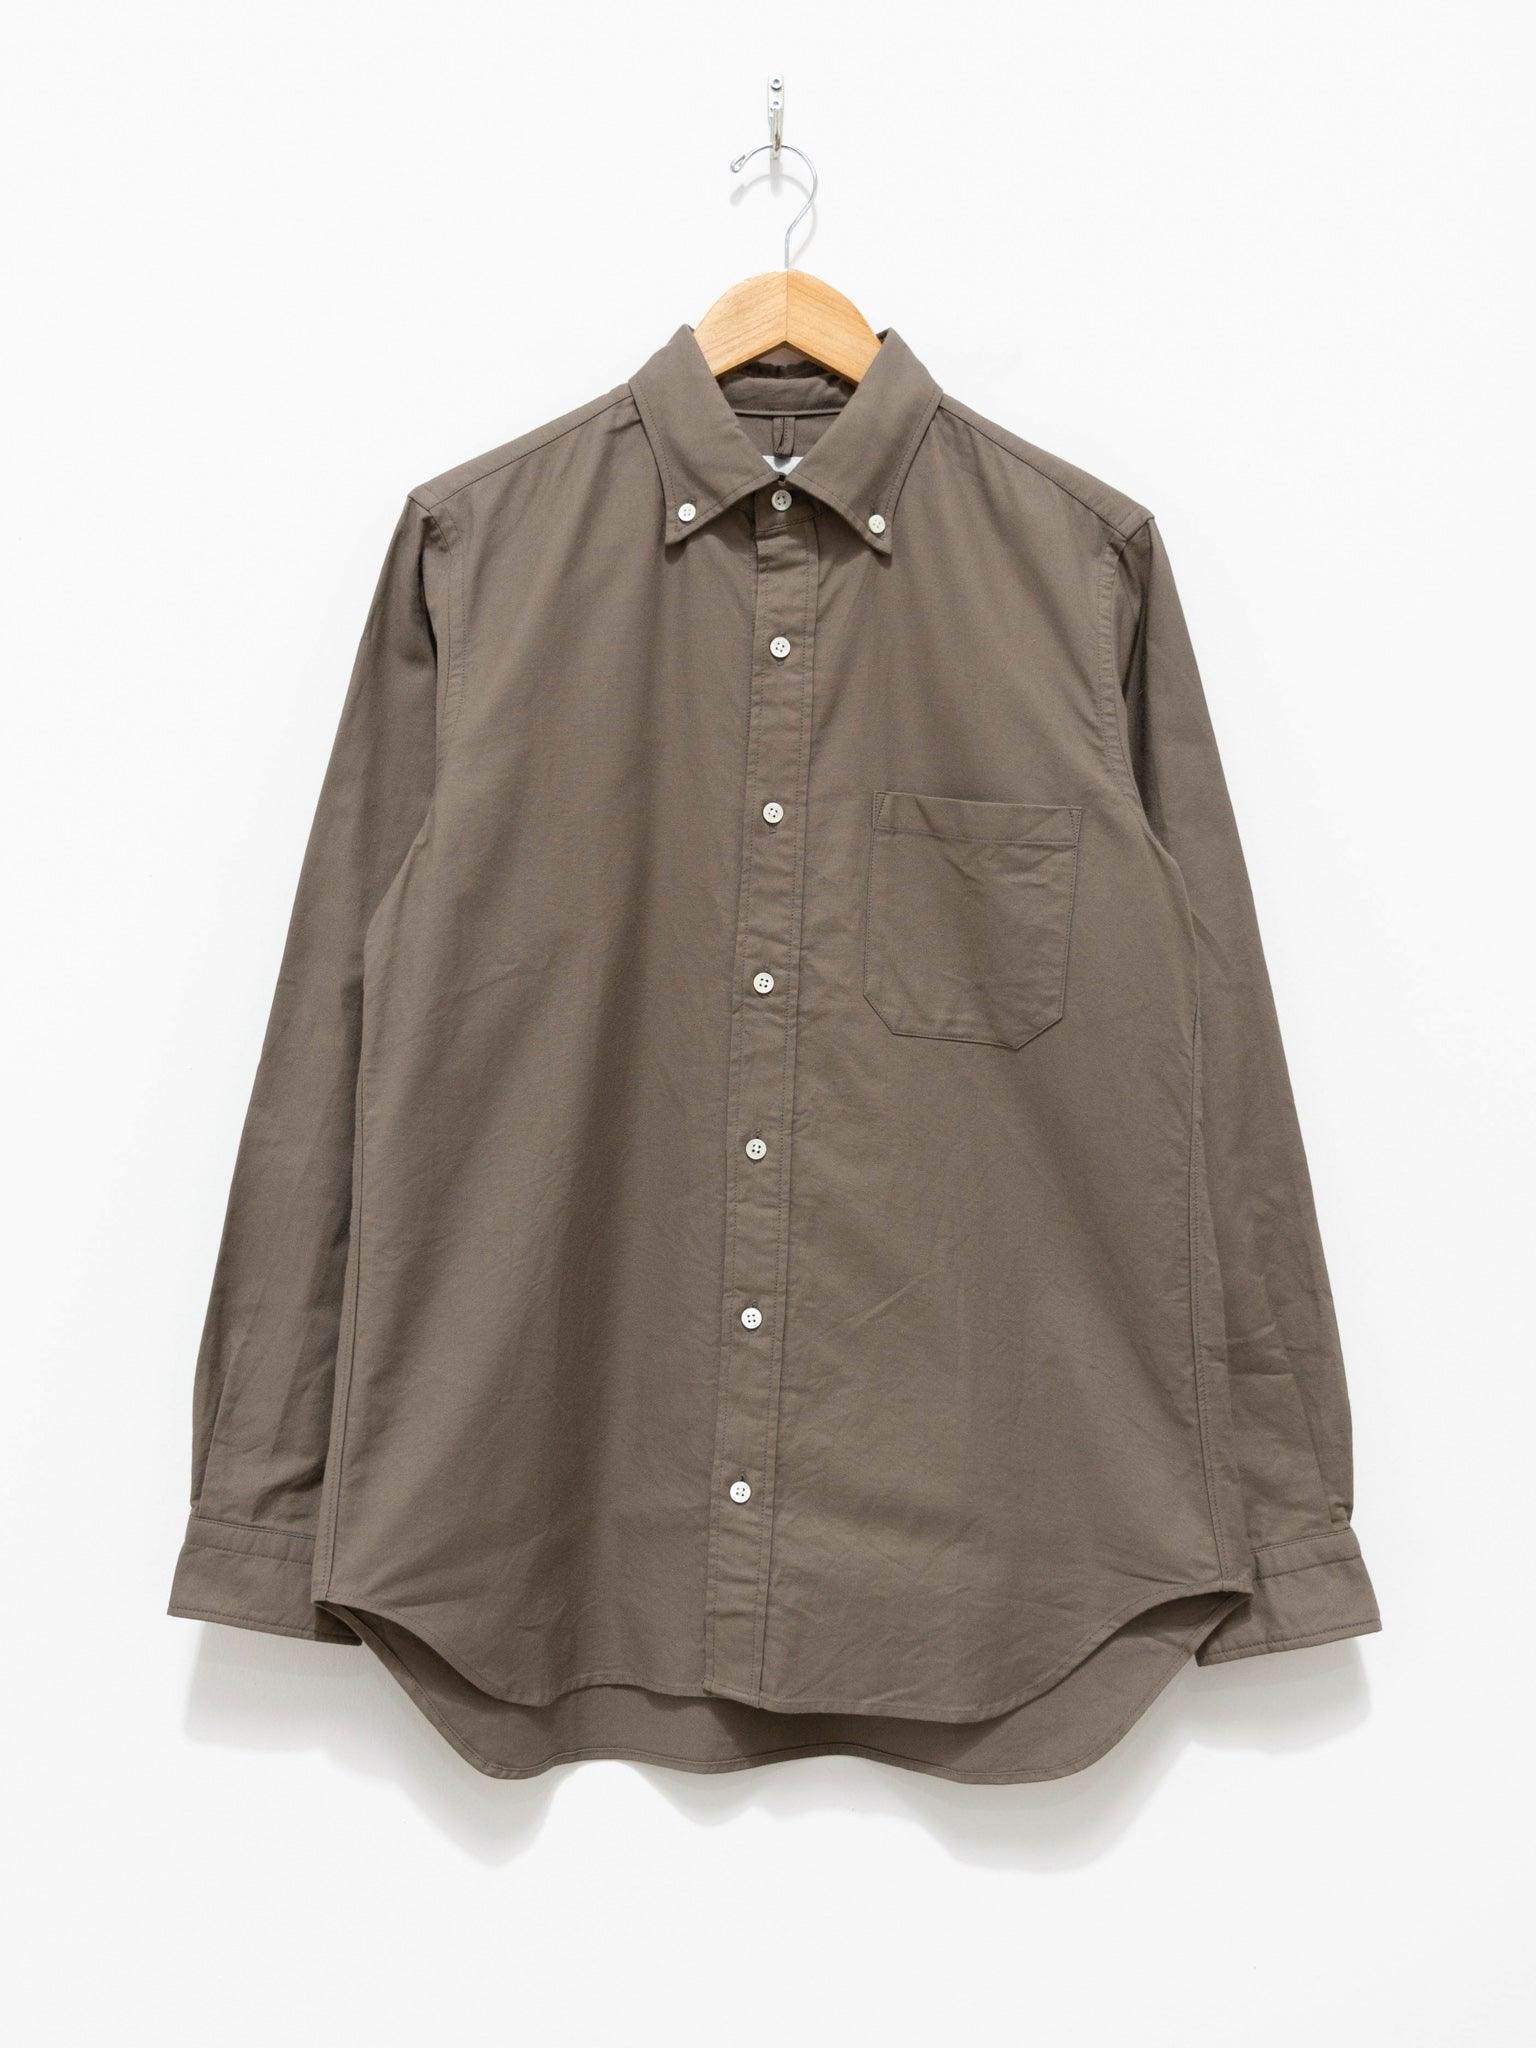 Namu Shop - ts(s) Oxford BD Shirt - Olive Khaki